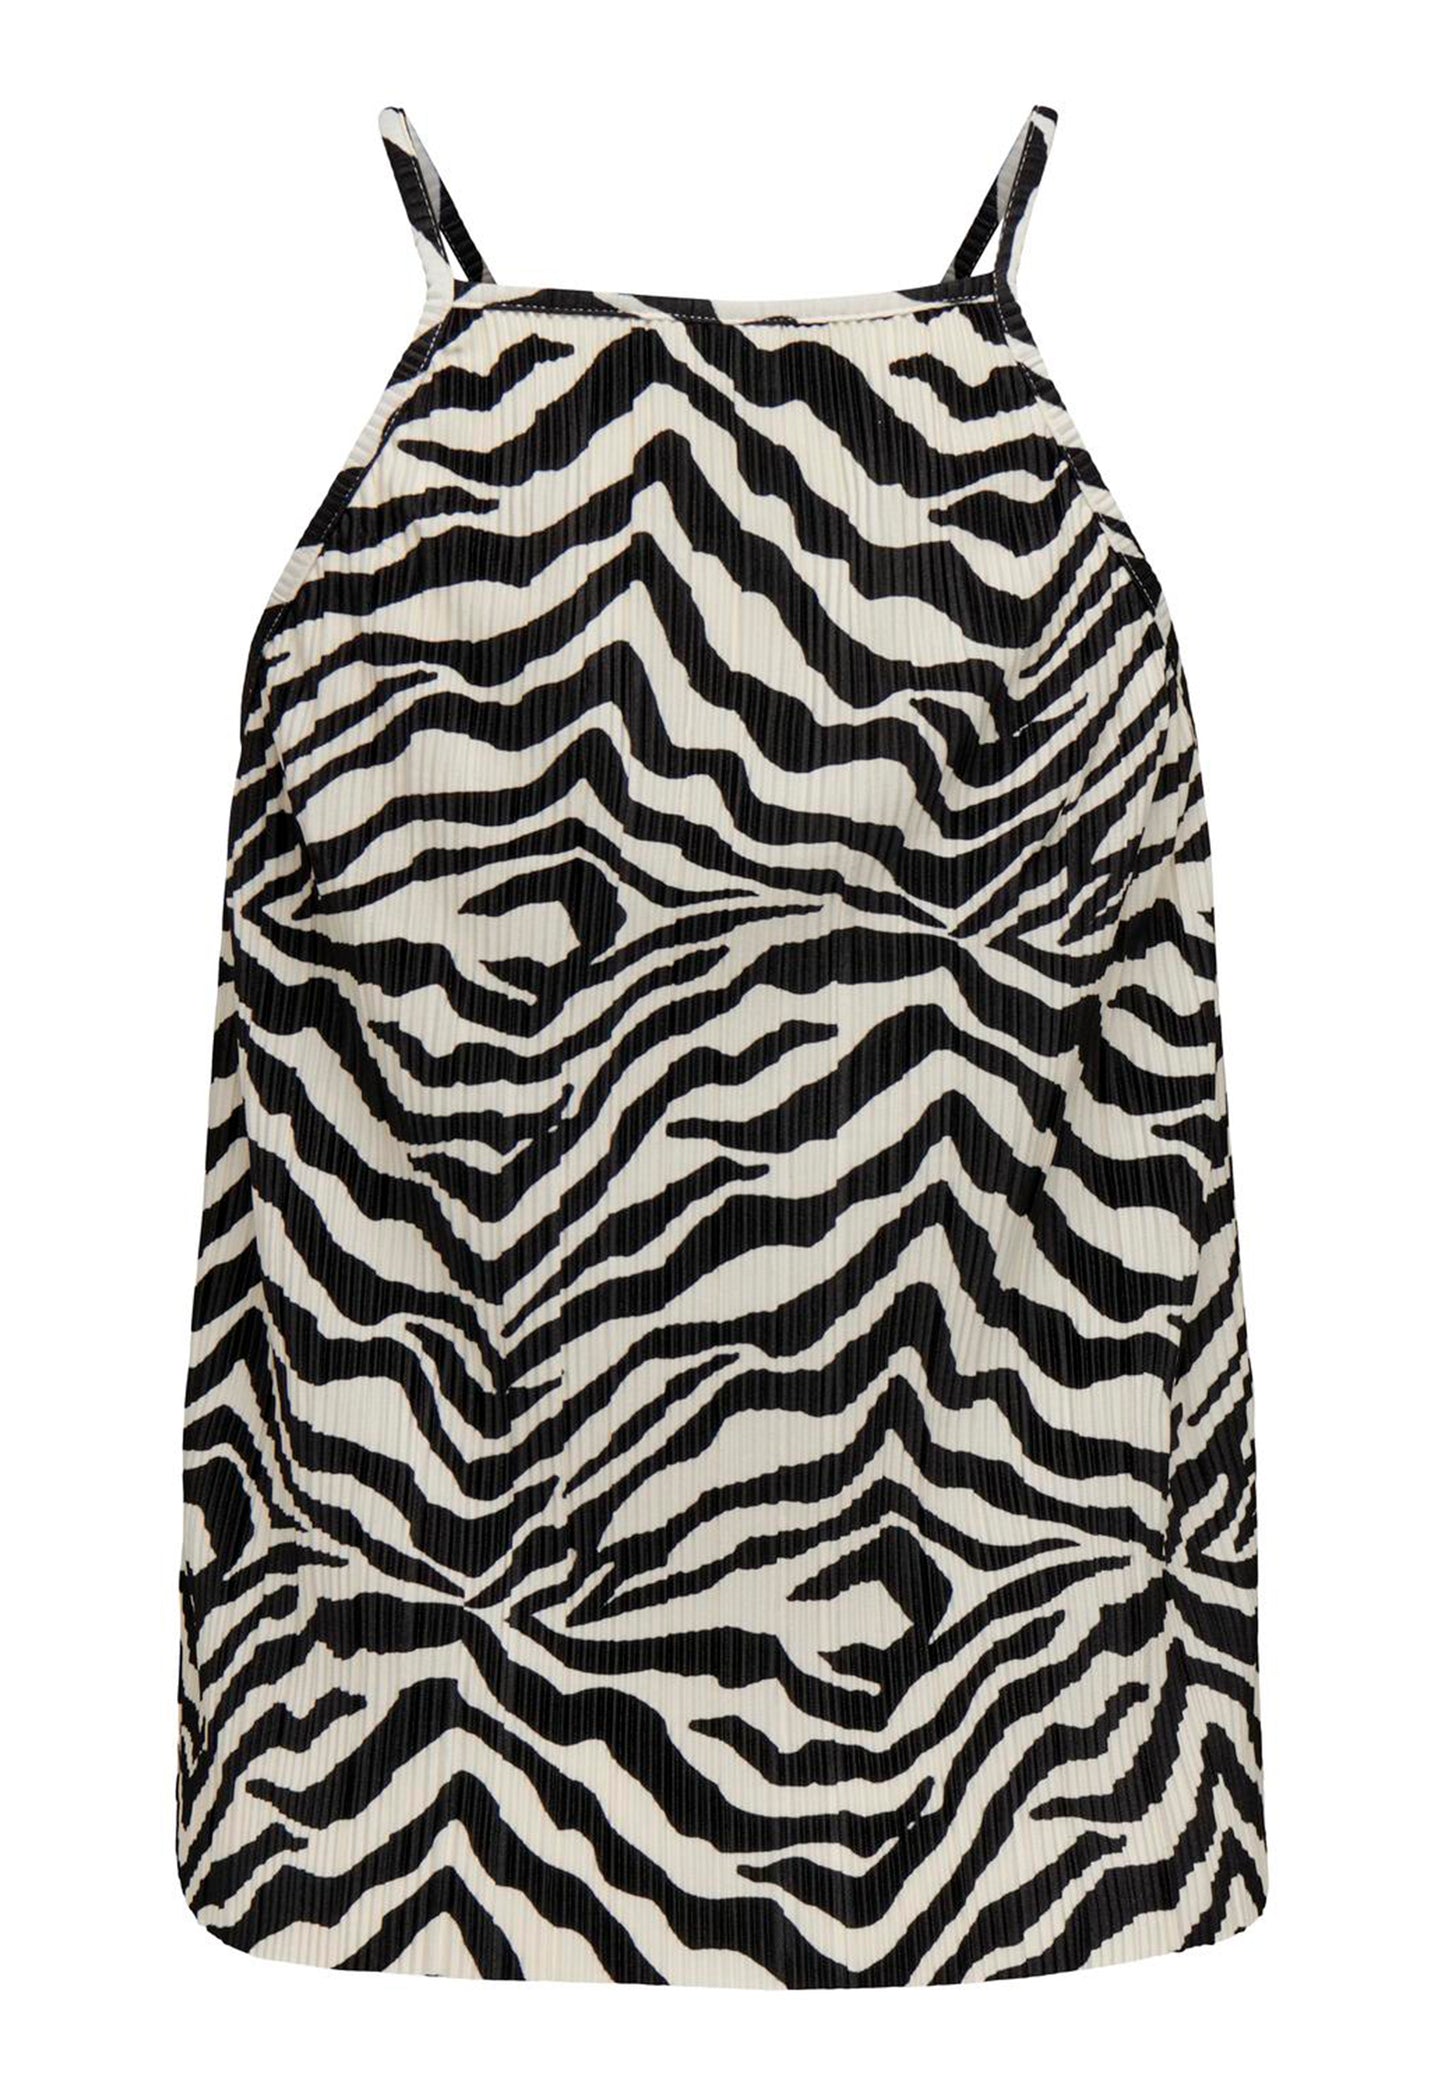 JDY Bravo Zebra Print Plisse Racer Strappy Vest Top in Black & Cream - One Nation Clothing